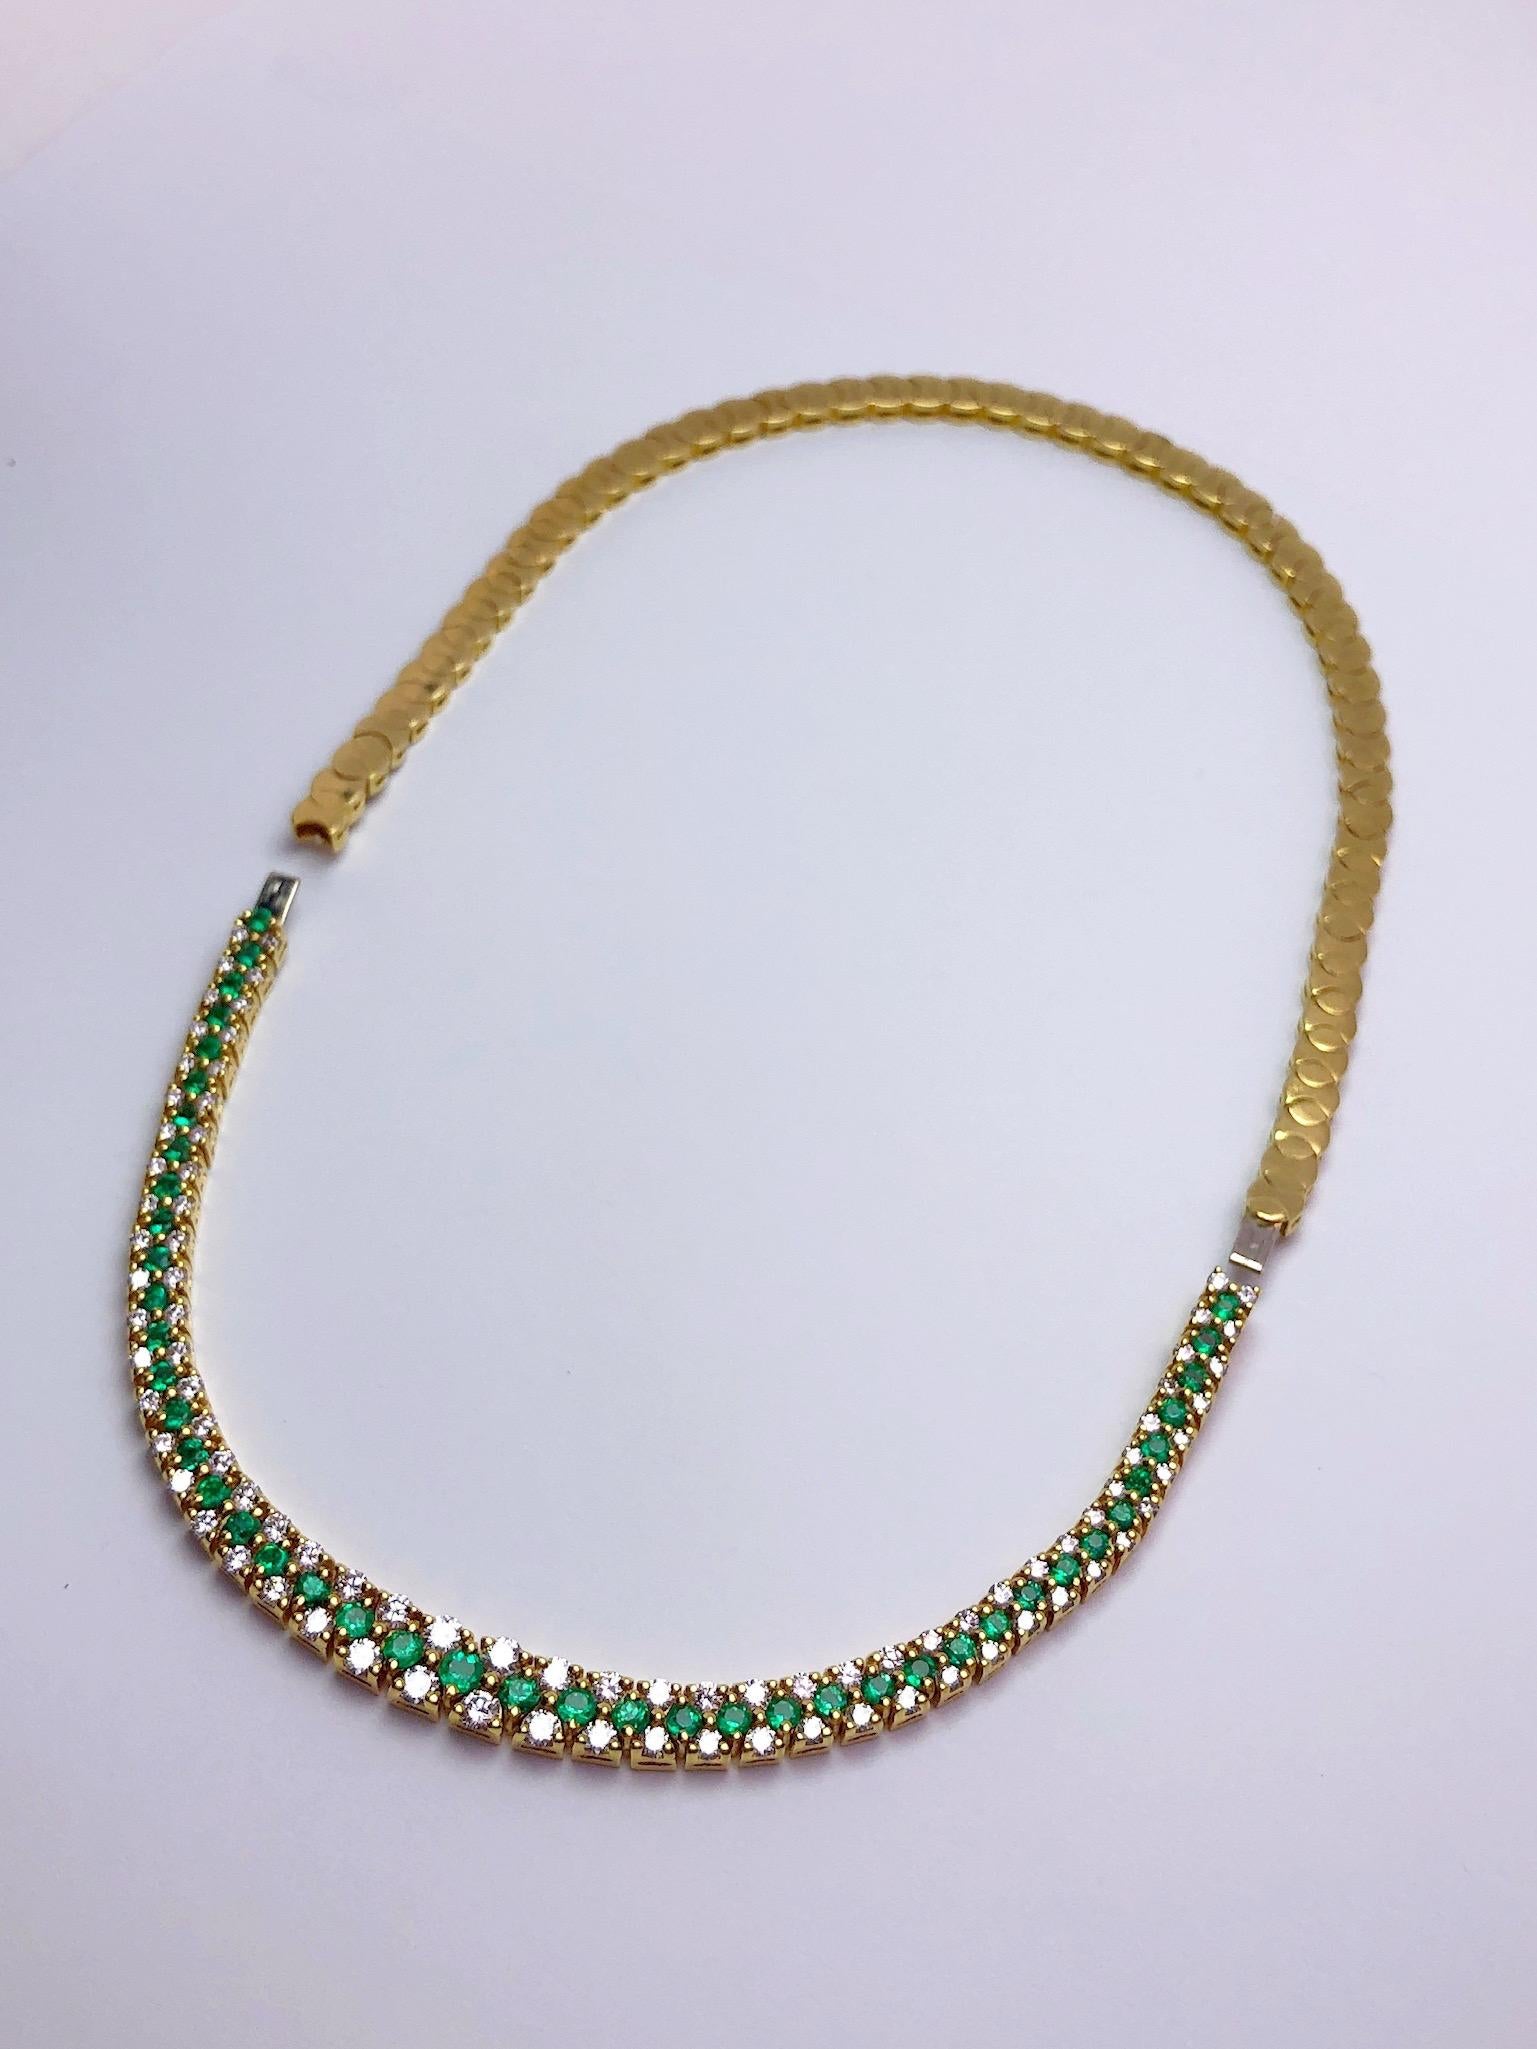 18 Karat Gold 3.68 Carat Emerald and 4.31 Carat Diamond Necklace and Bracelet For Sale 2